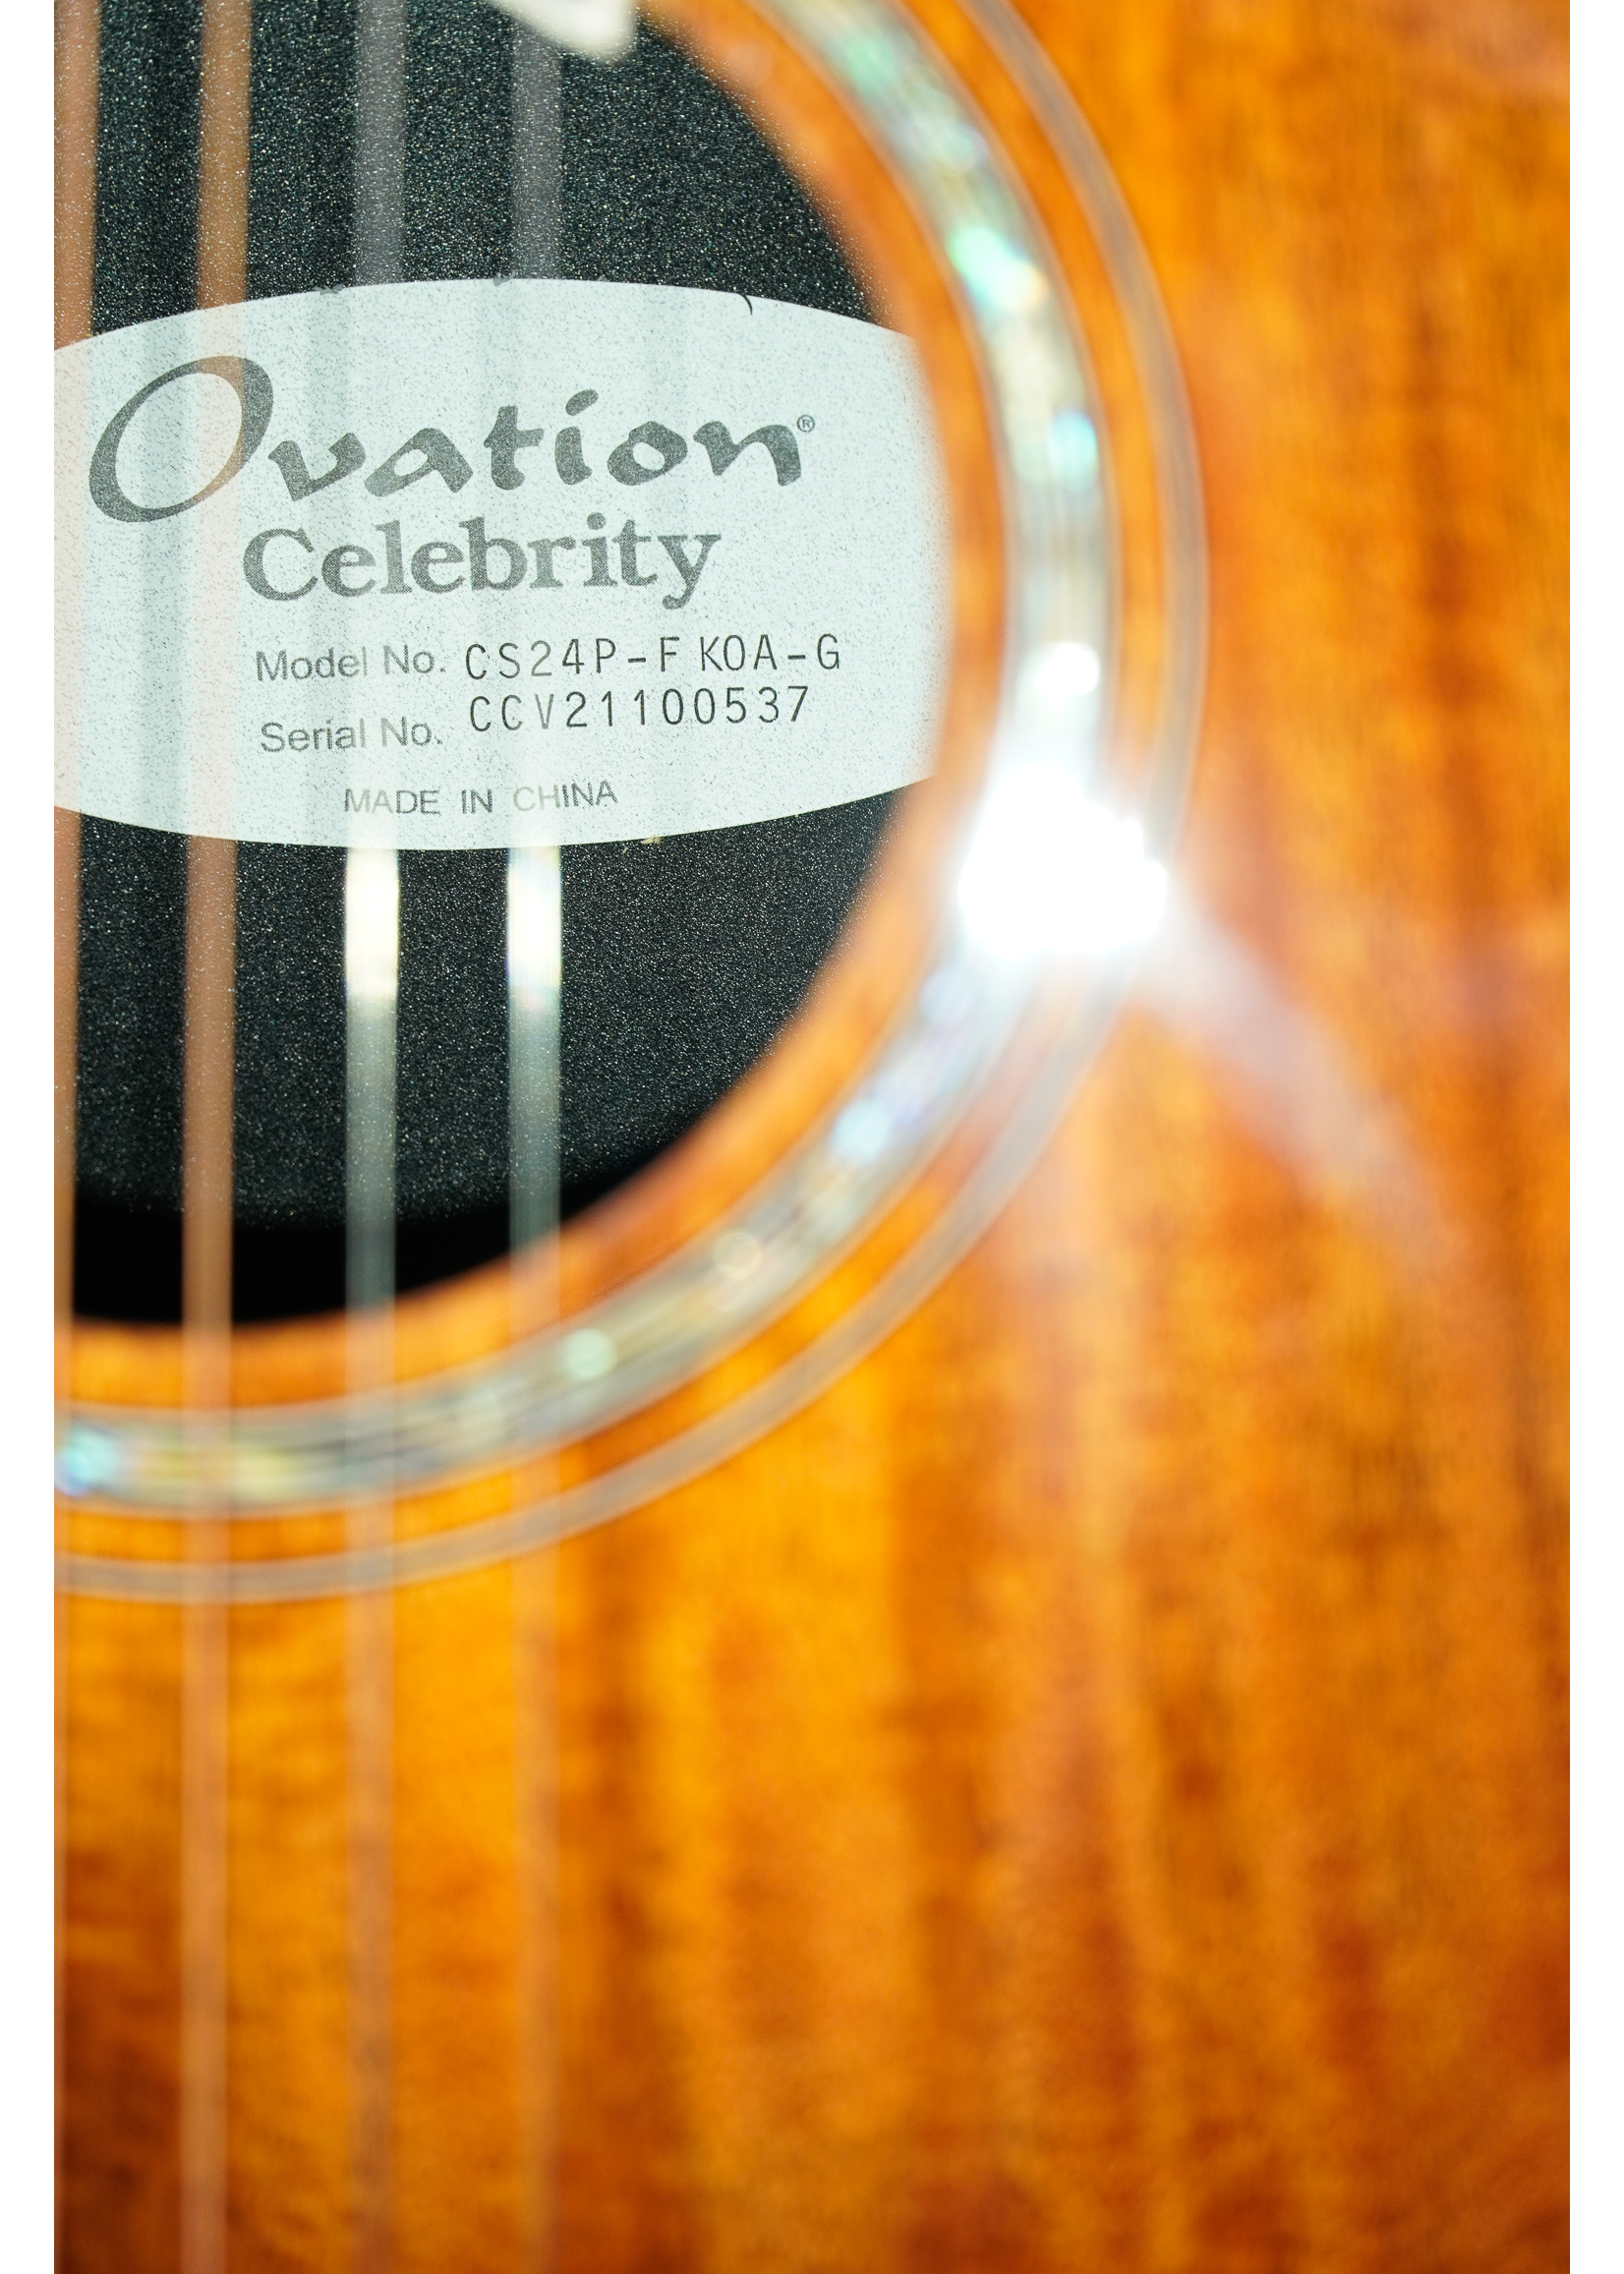 Ovation Celebrity Standard CS24P-FKOA